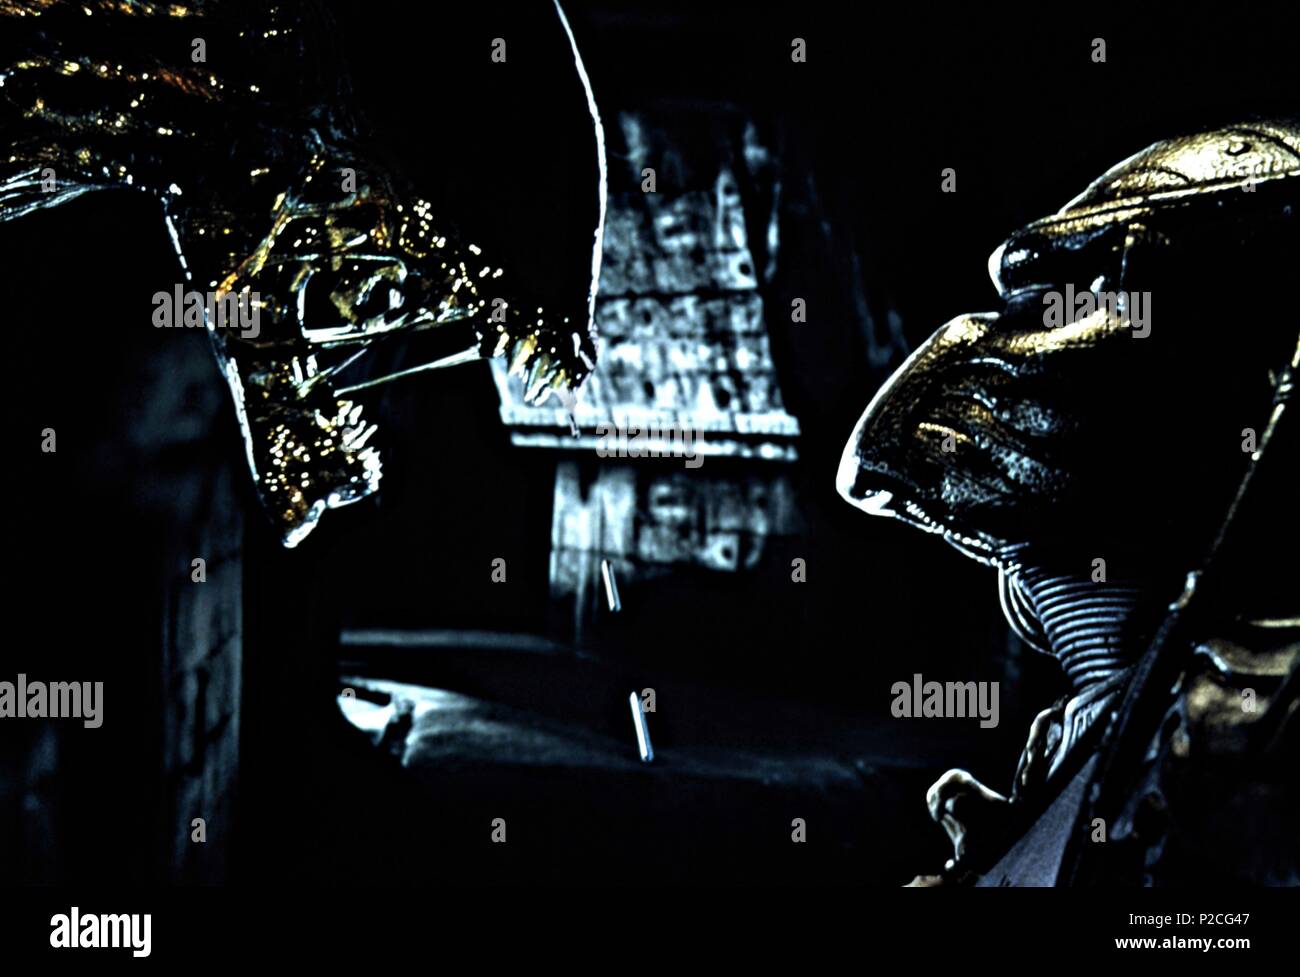 Original Film Title: ALIEN VS. PREDATOR.  English Title: ALIEN VS. PREDATOR.  Film Director: PAUL W. S. ANDERSON.  Year: 2004. Credit: 20TH CENTURY FOX / Album Stock Photo